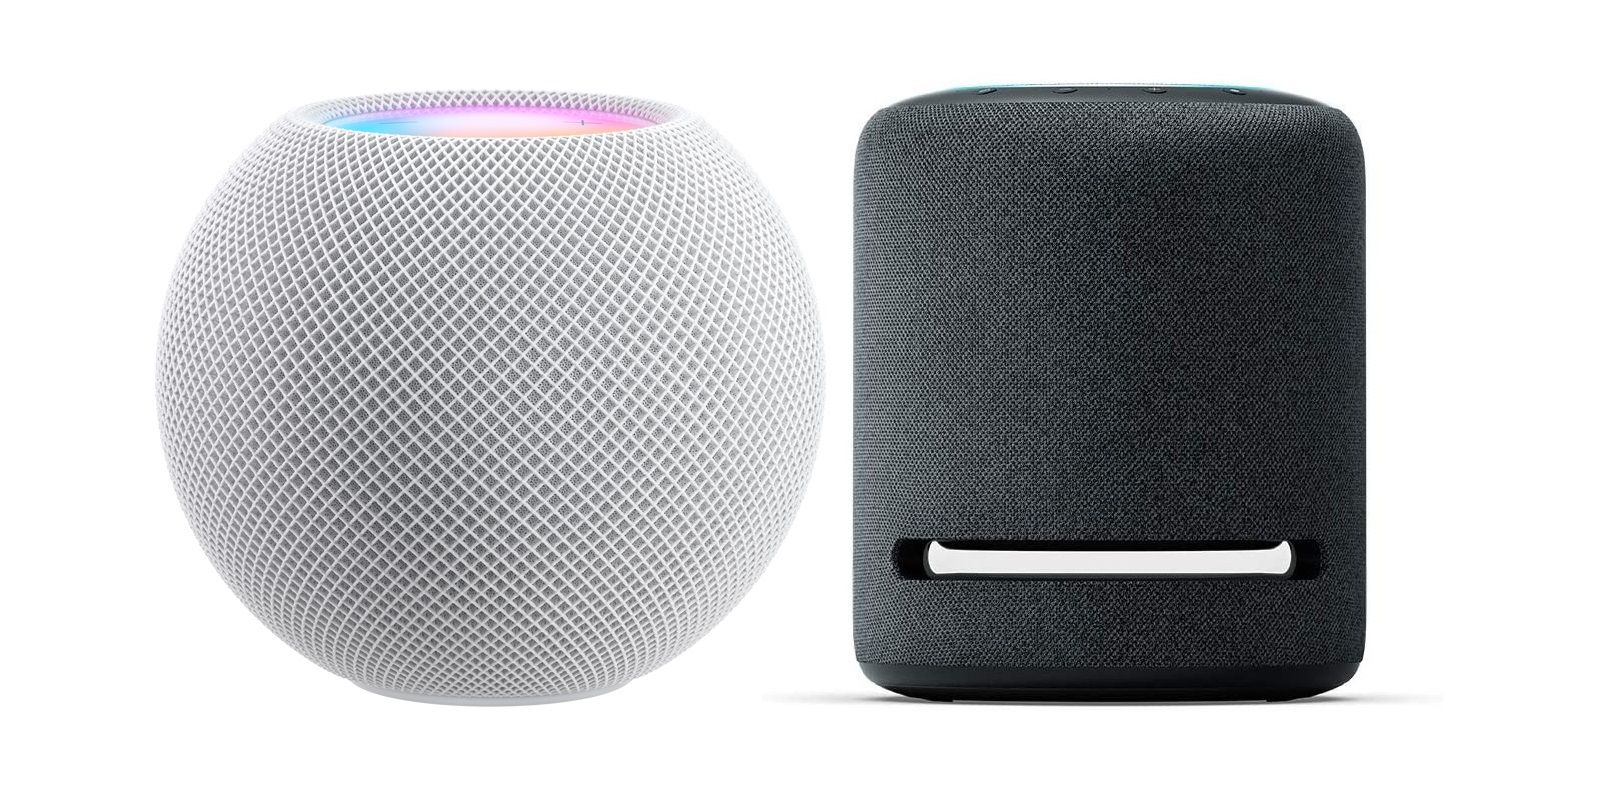 Apple & Amazon smart speakers